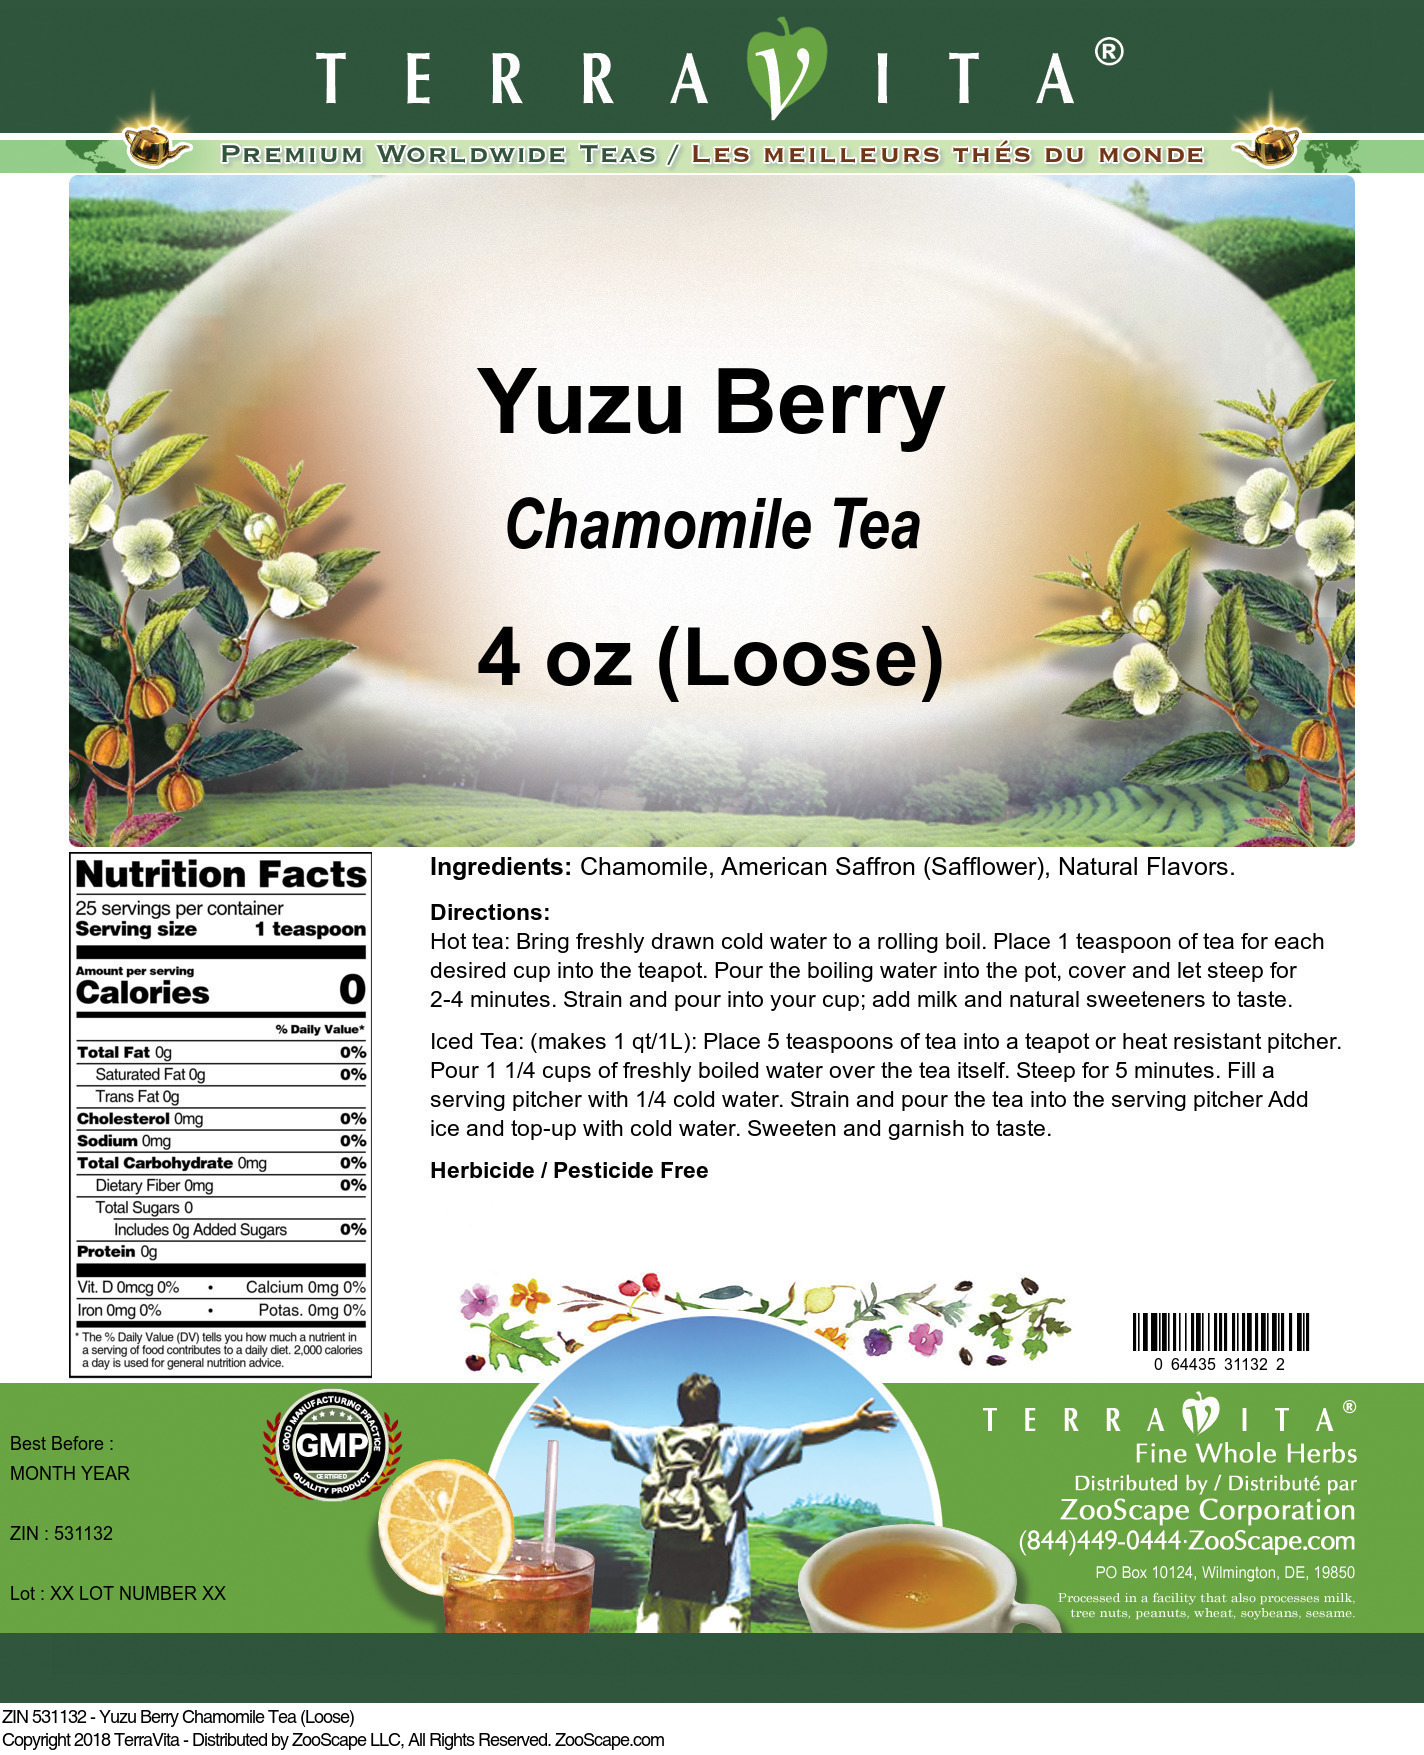 Yuzu Berry Chamomile Tea (Loose) - Label